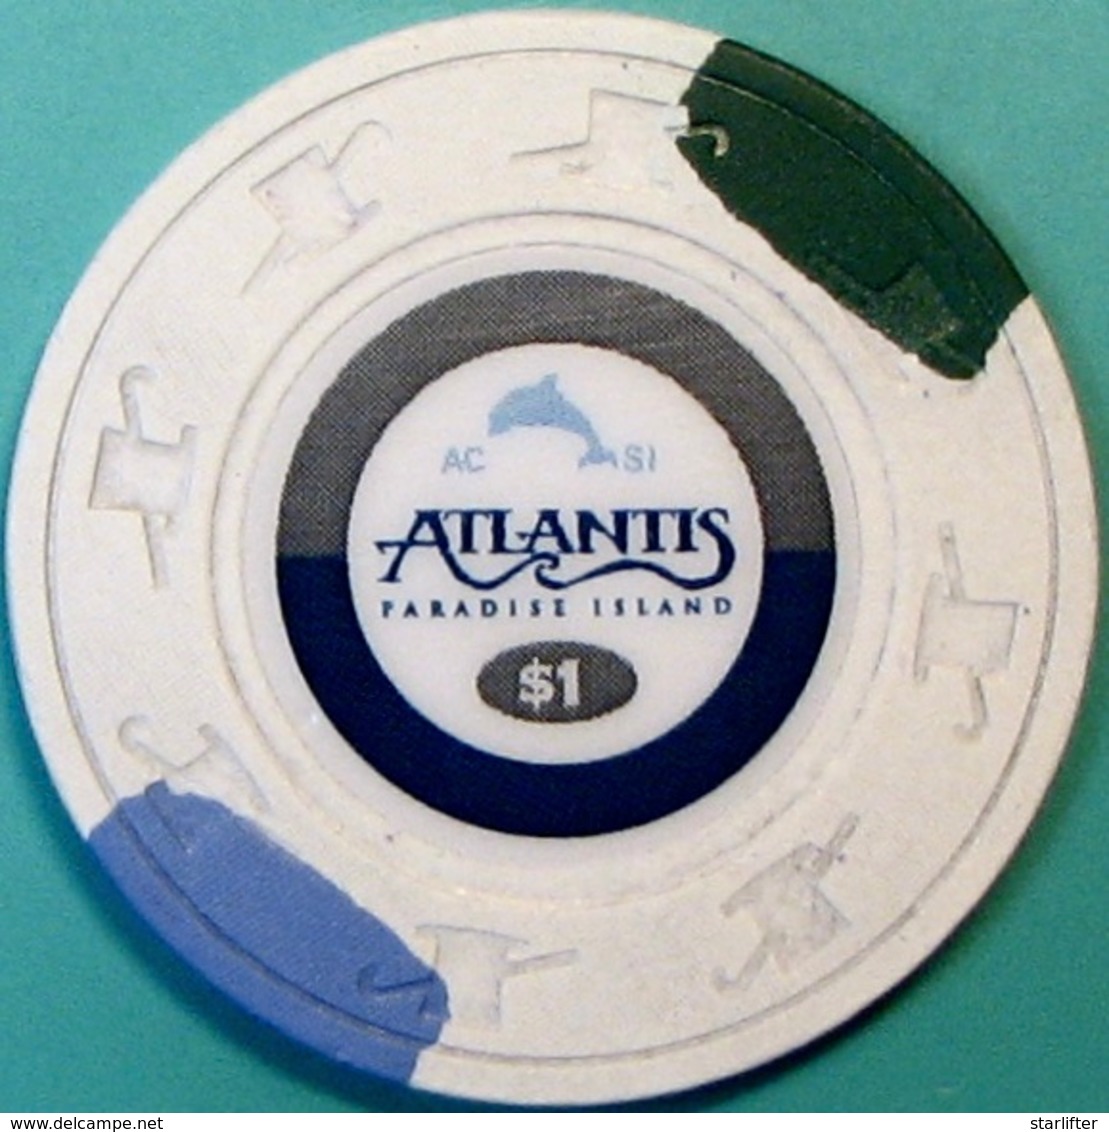 $1 Casino Chip. Atlantis, Paradise Island, Bahamas. S46. - Casino